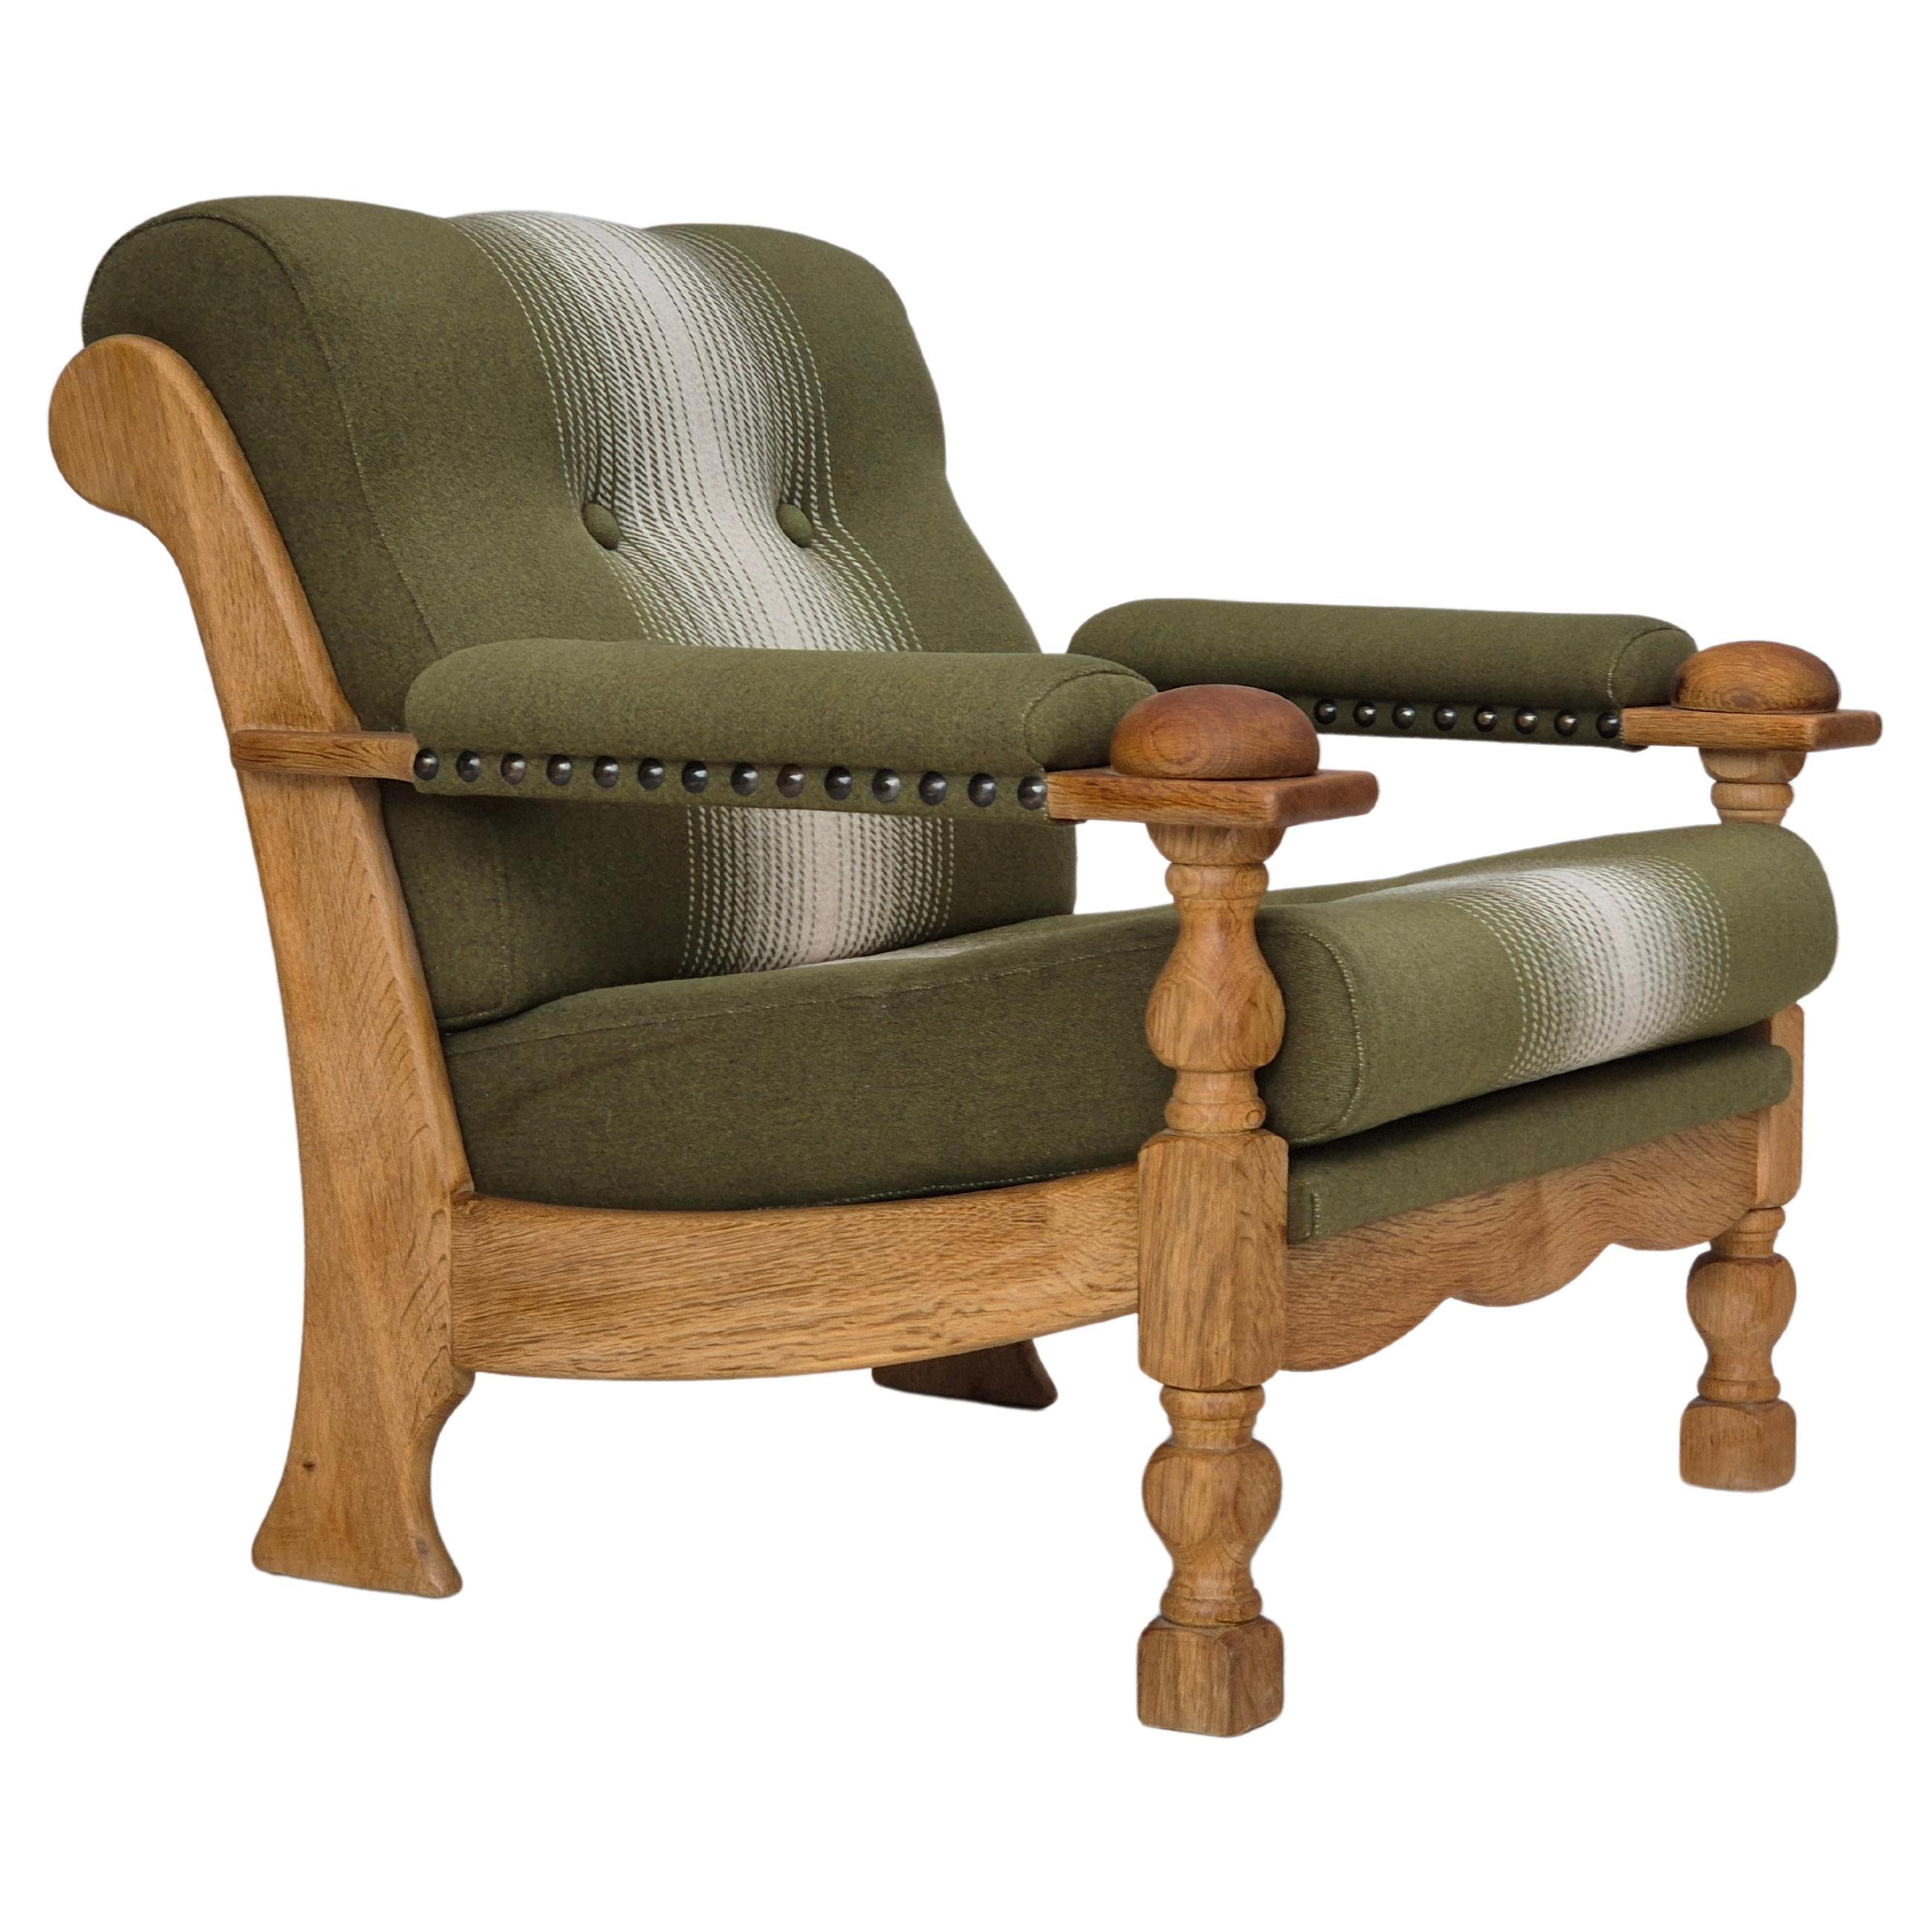 1970s, Danish armchair, original condition, wool, solid oak wood.